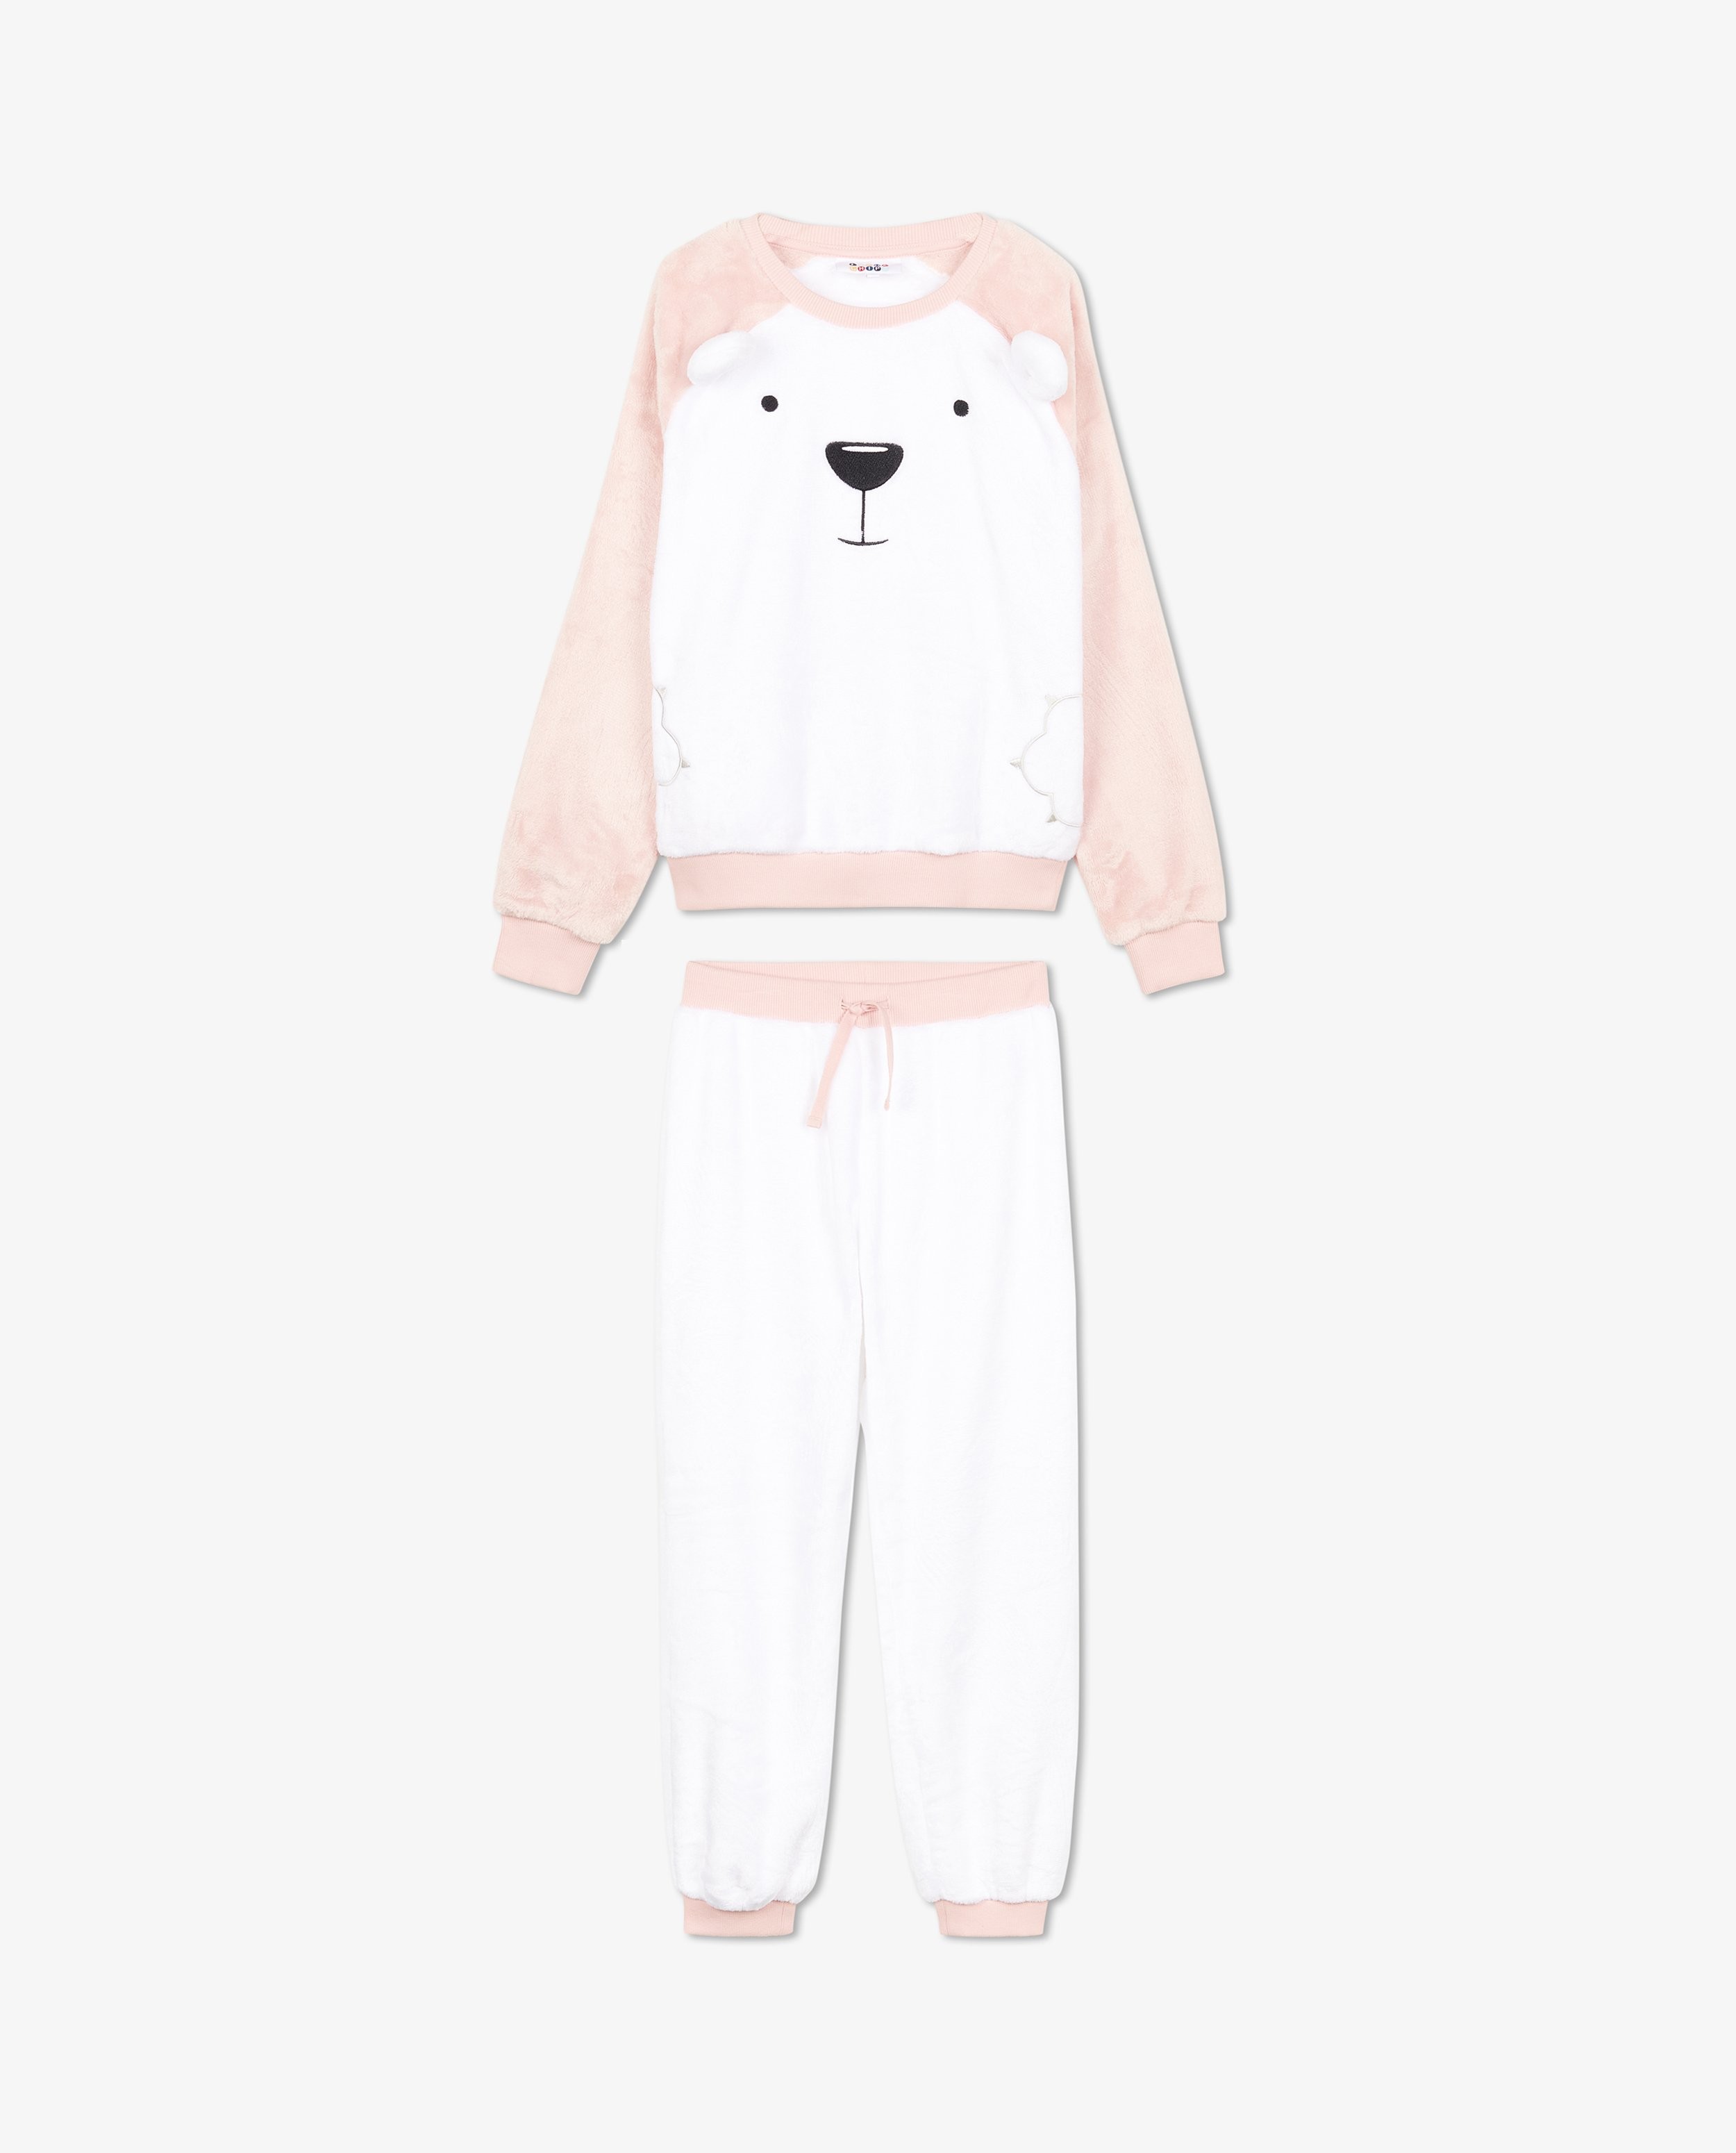 Pyjamas - Pyjama ours polaire blanc en fleece